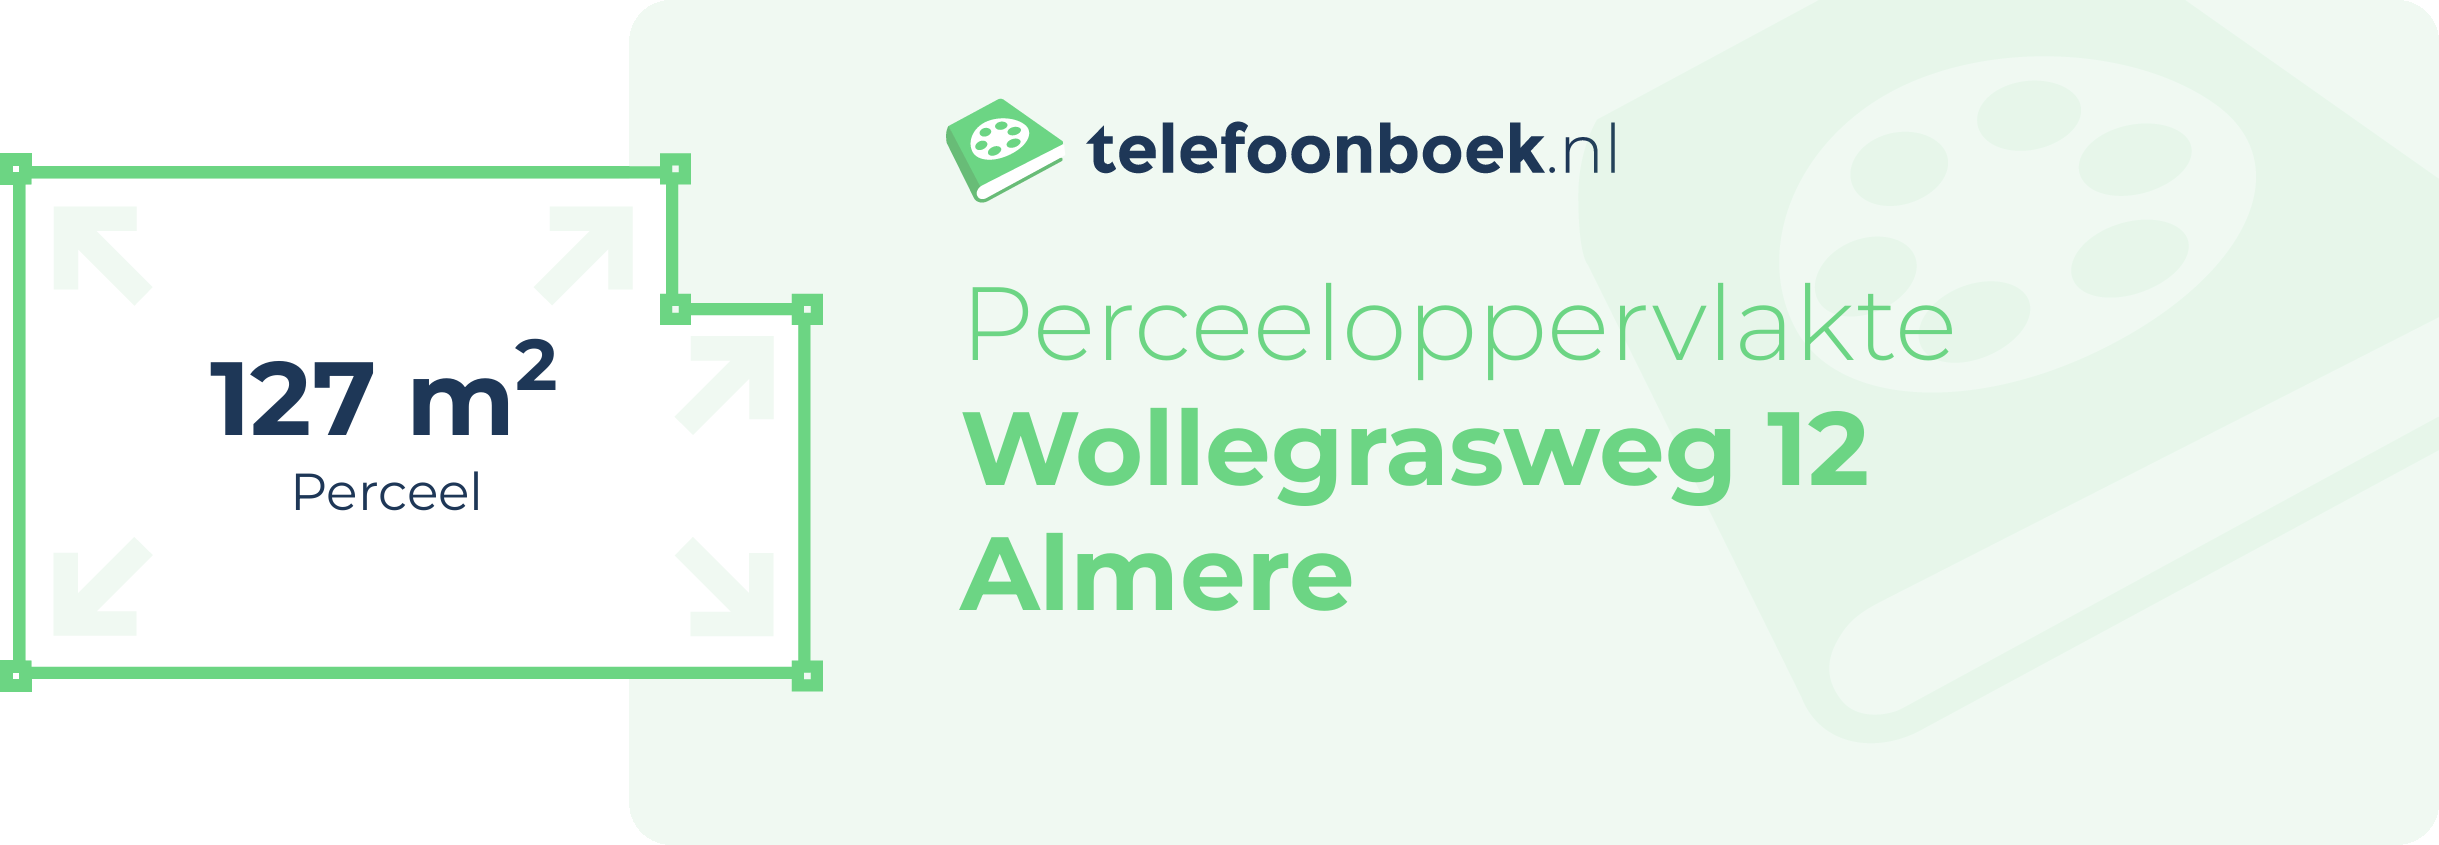 Perceeloppervlakte Wollegrasweg 12 Almere